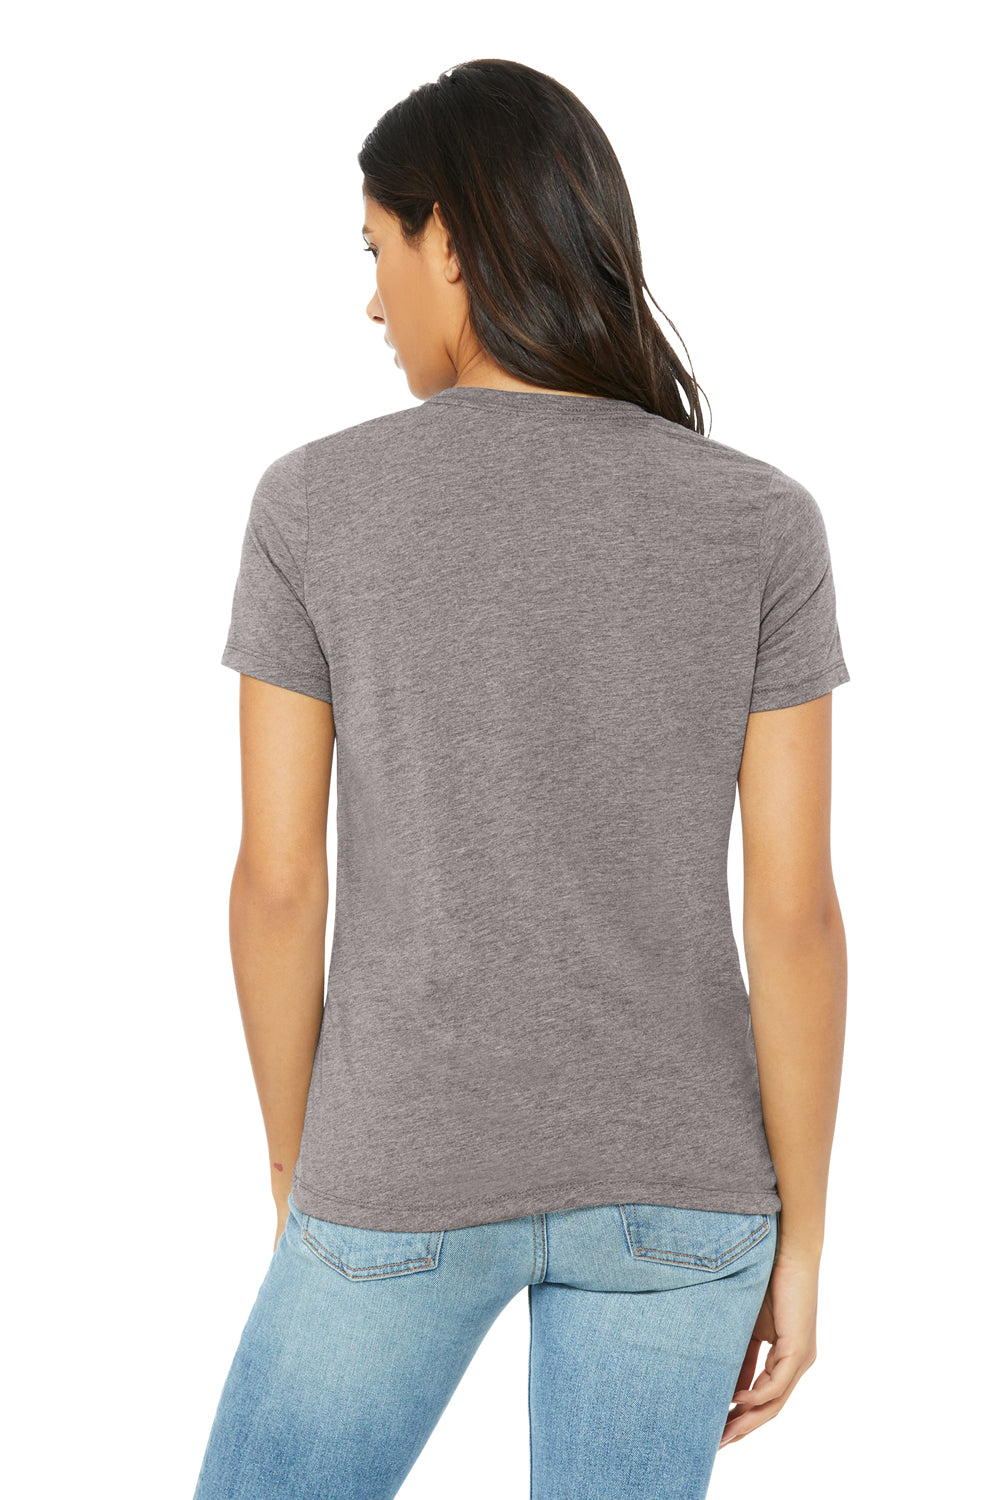 Bella + Canvas BC6413 Womens Short Sleeve Crewneck T-Shirt Storm Grey Model Back